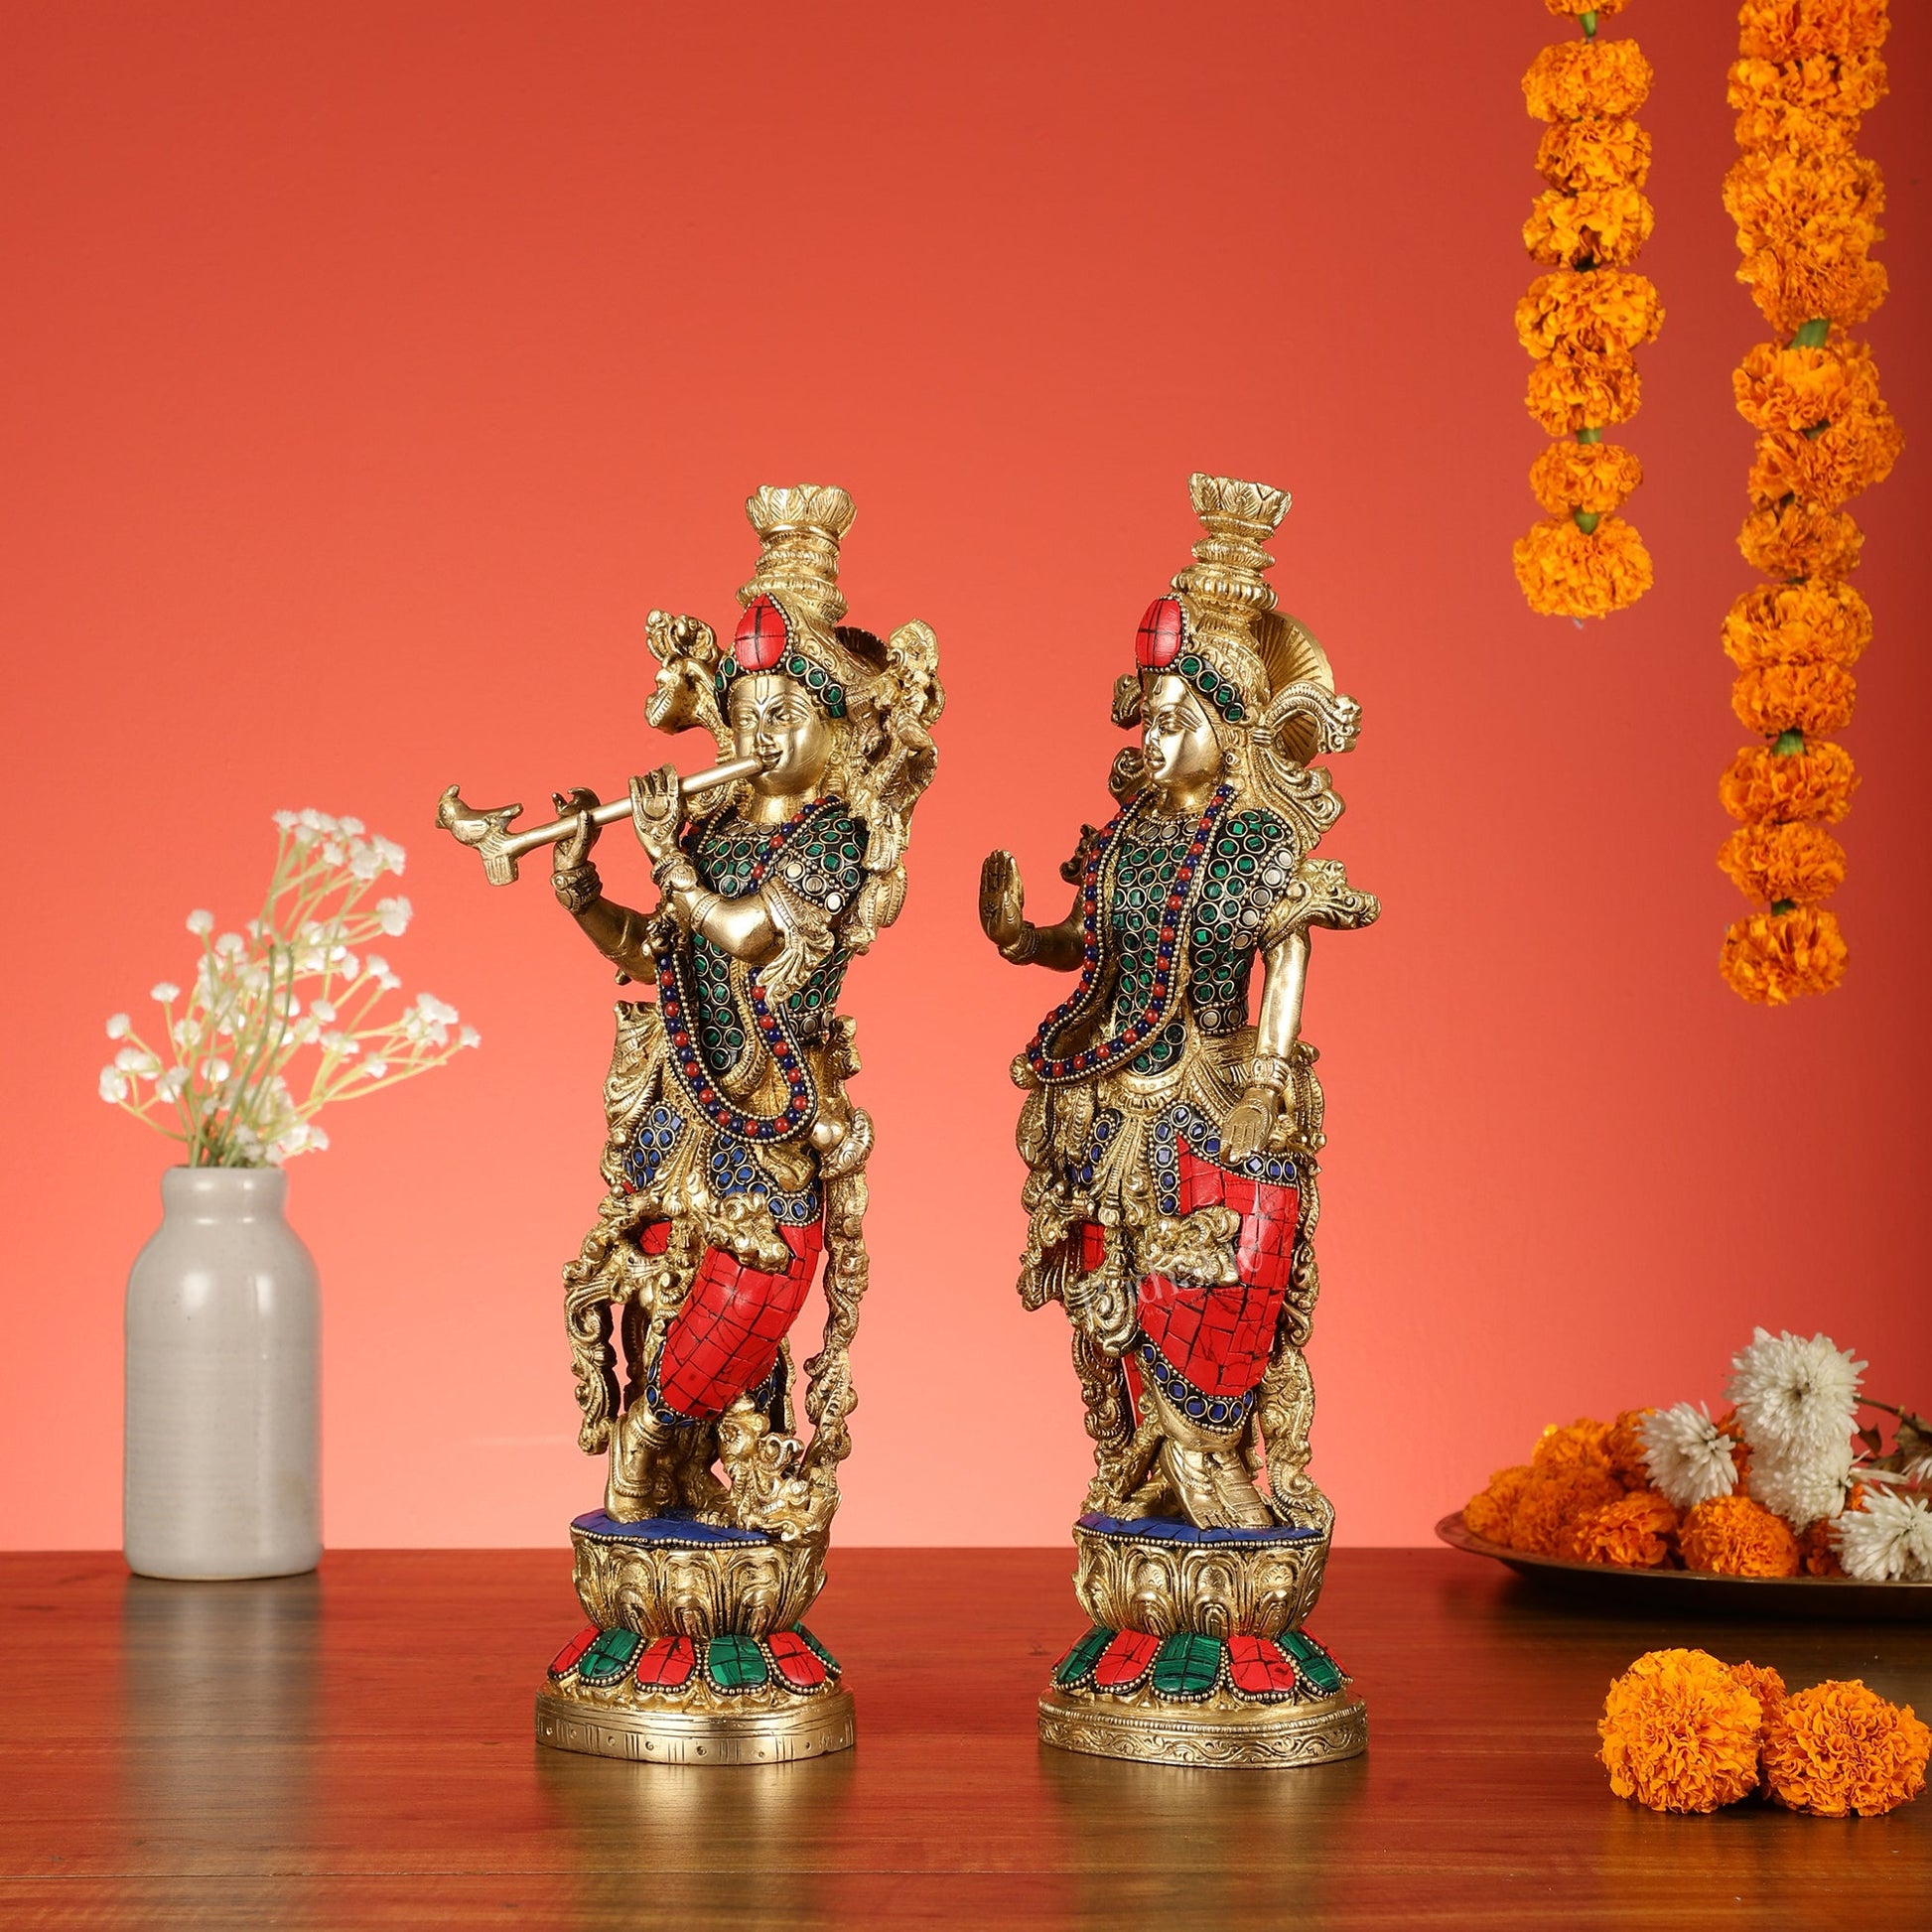 Pure Brass Radha Krishna Statues - Exquisite Handcrafted Art - 14 inch - Budhshiv.com